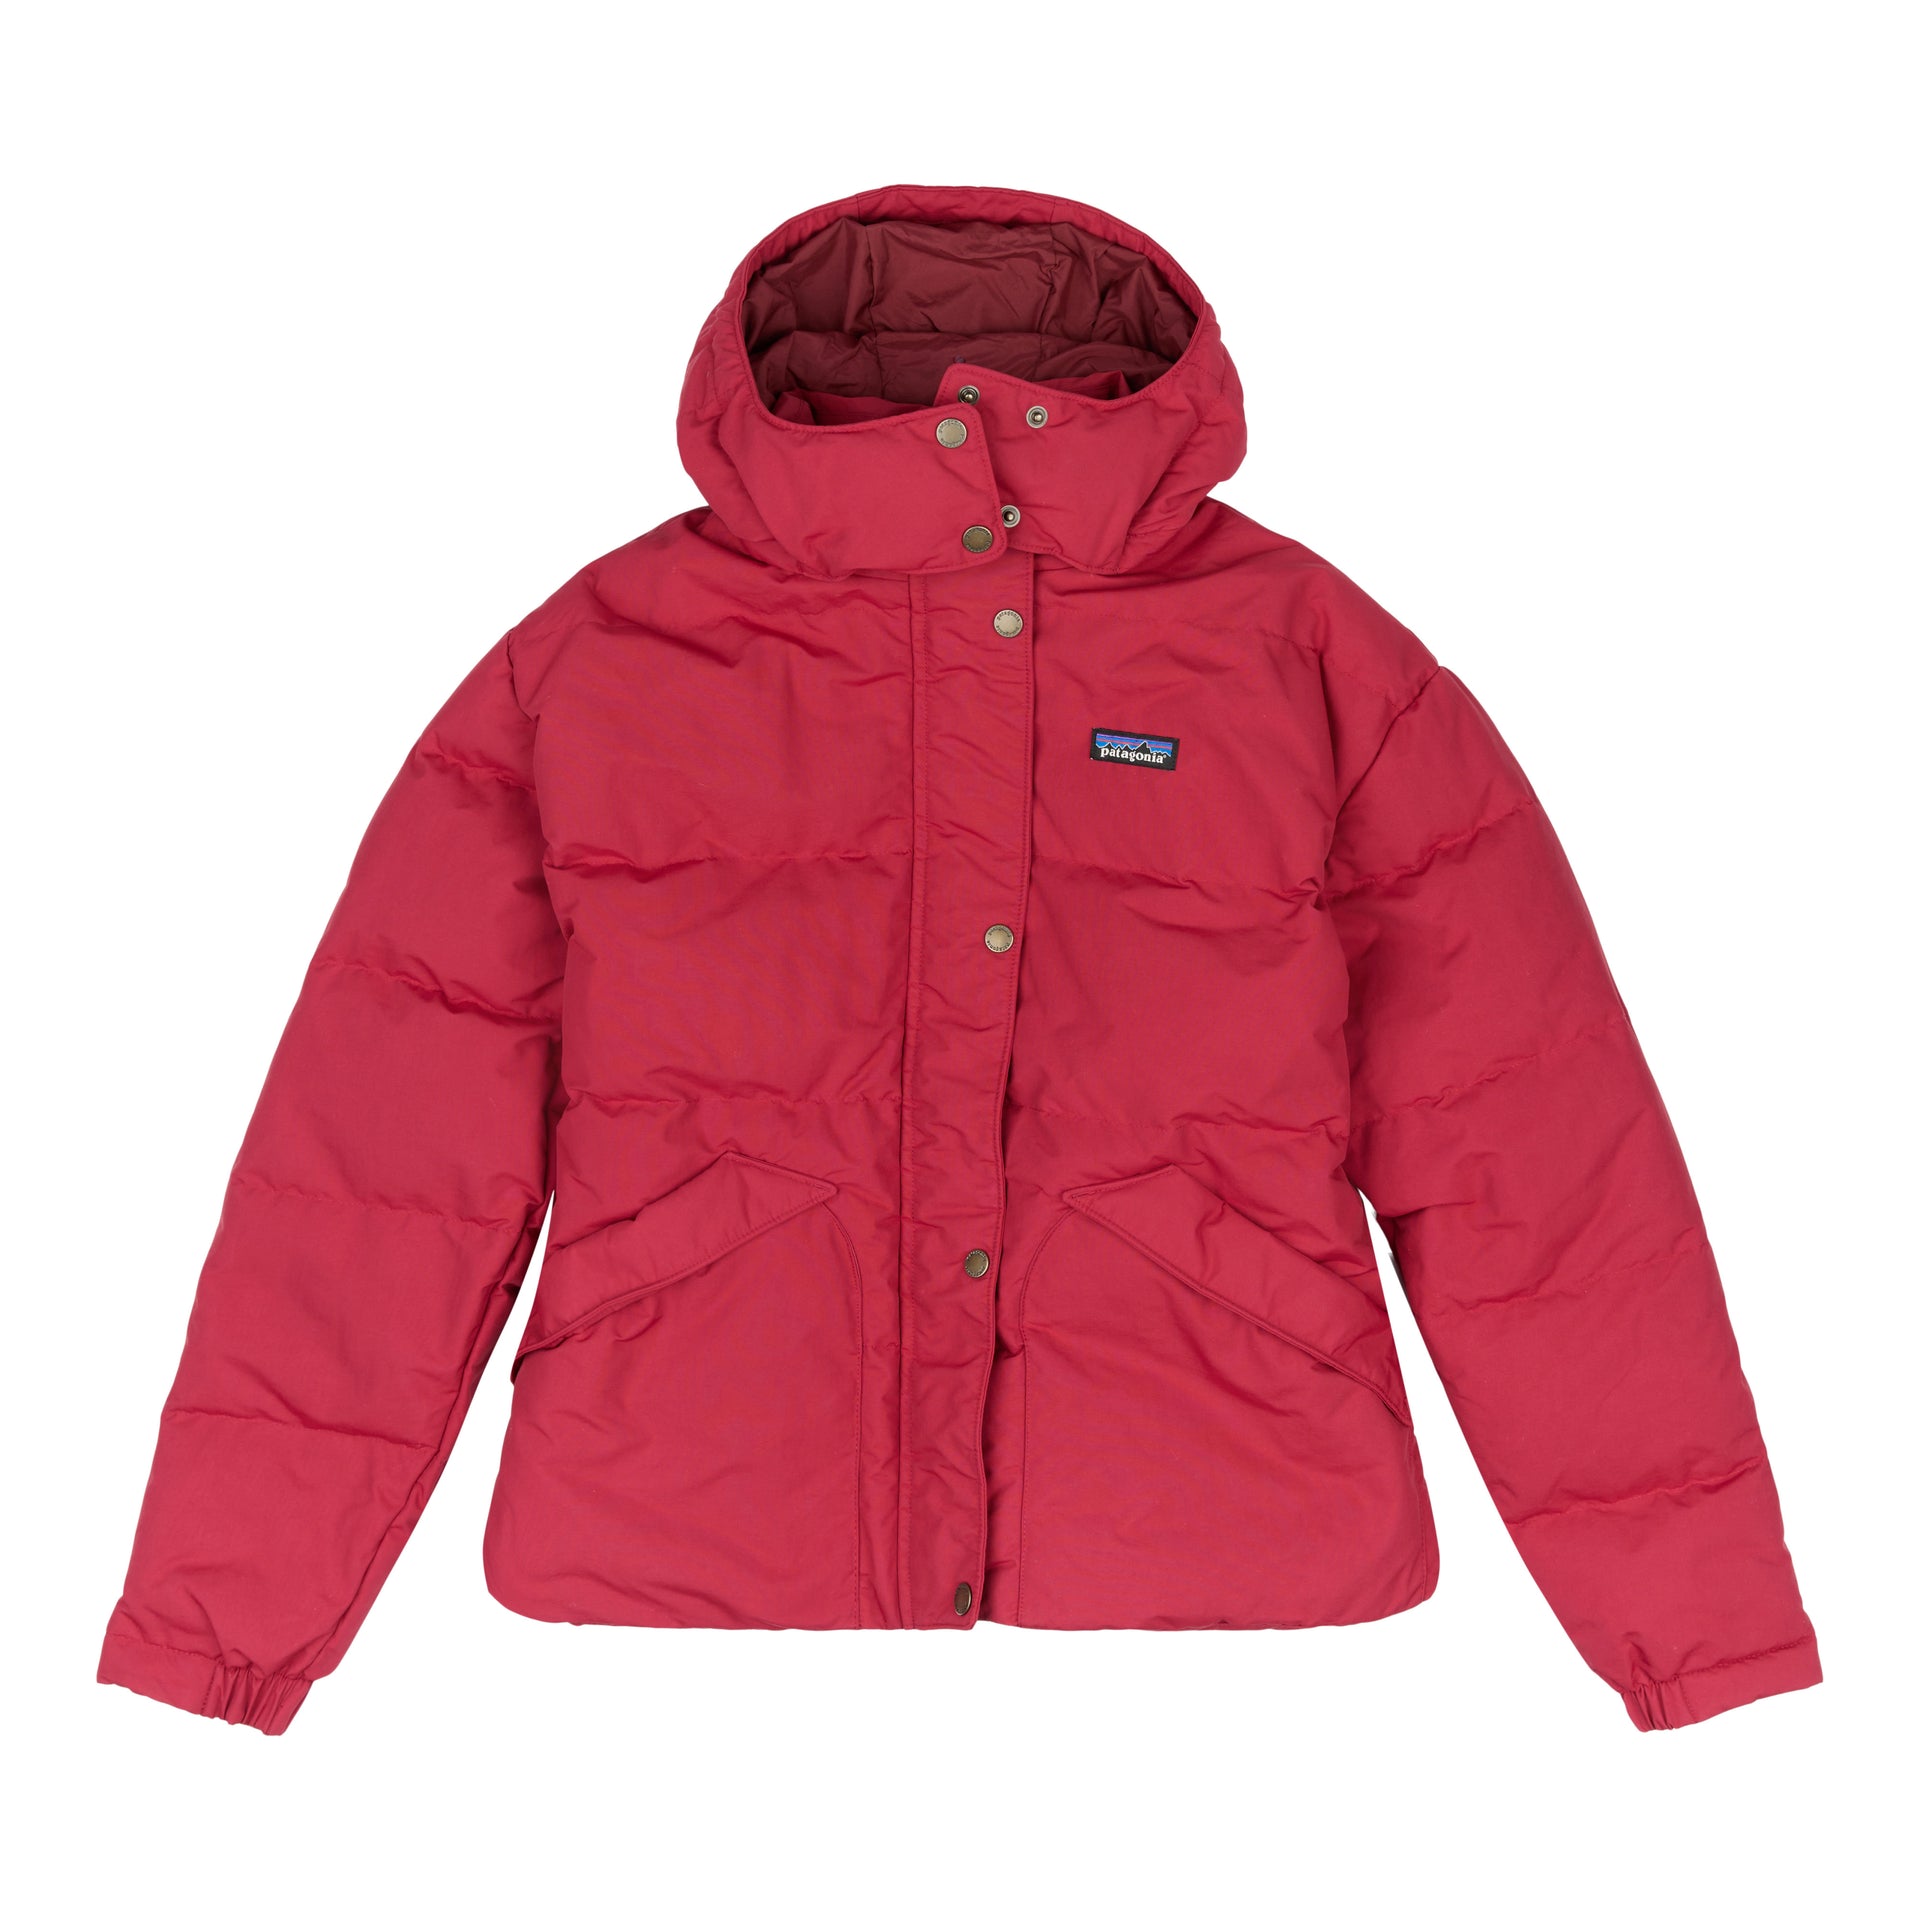 Patagonia Downdrift Jacket - Thoughts? Should I buy? : r/PatagoniaClothing